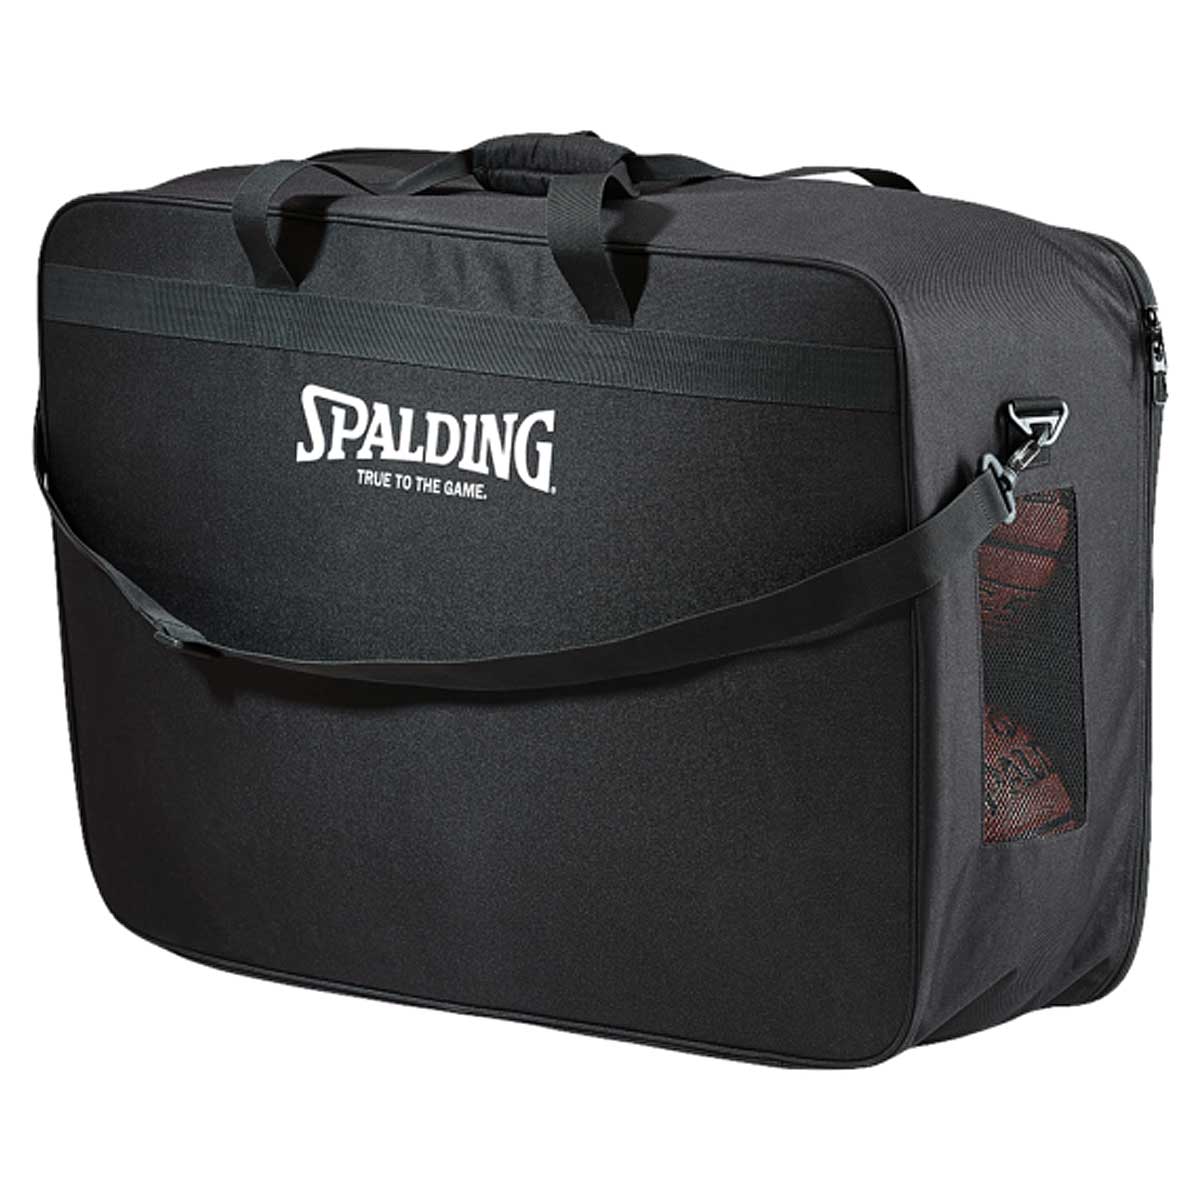 Spalding Ball Bag, Black